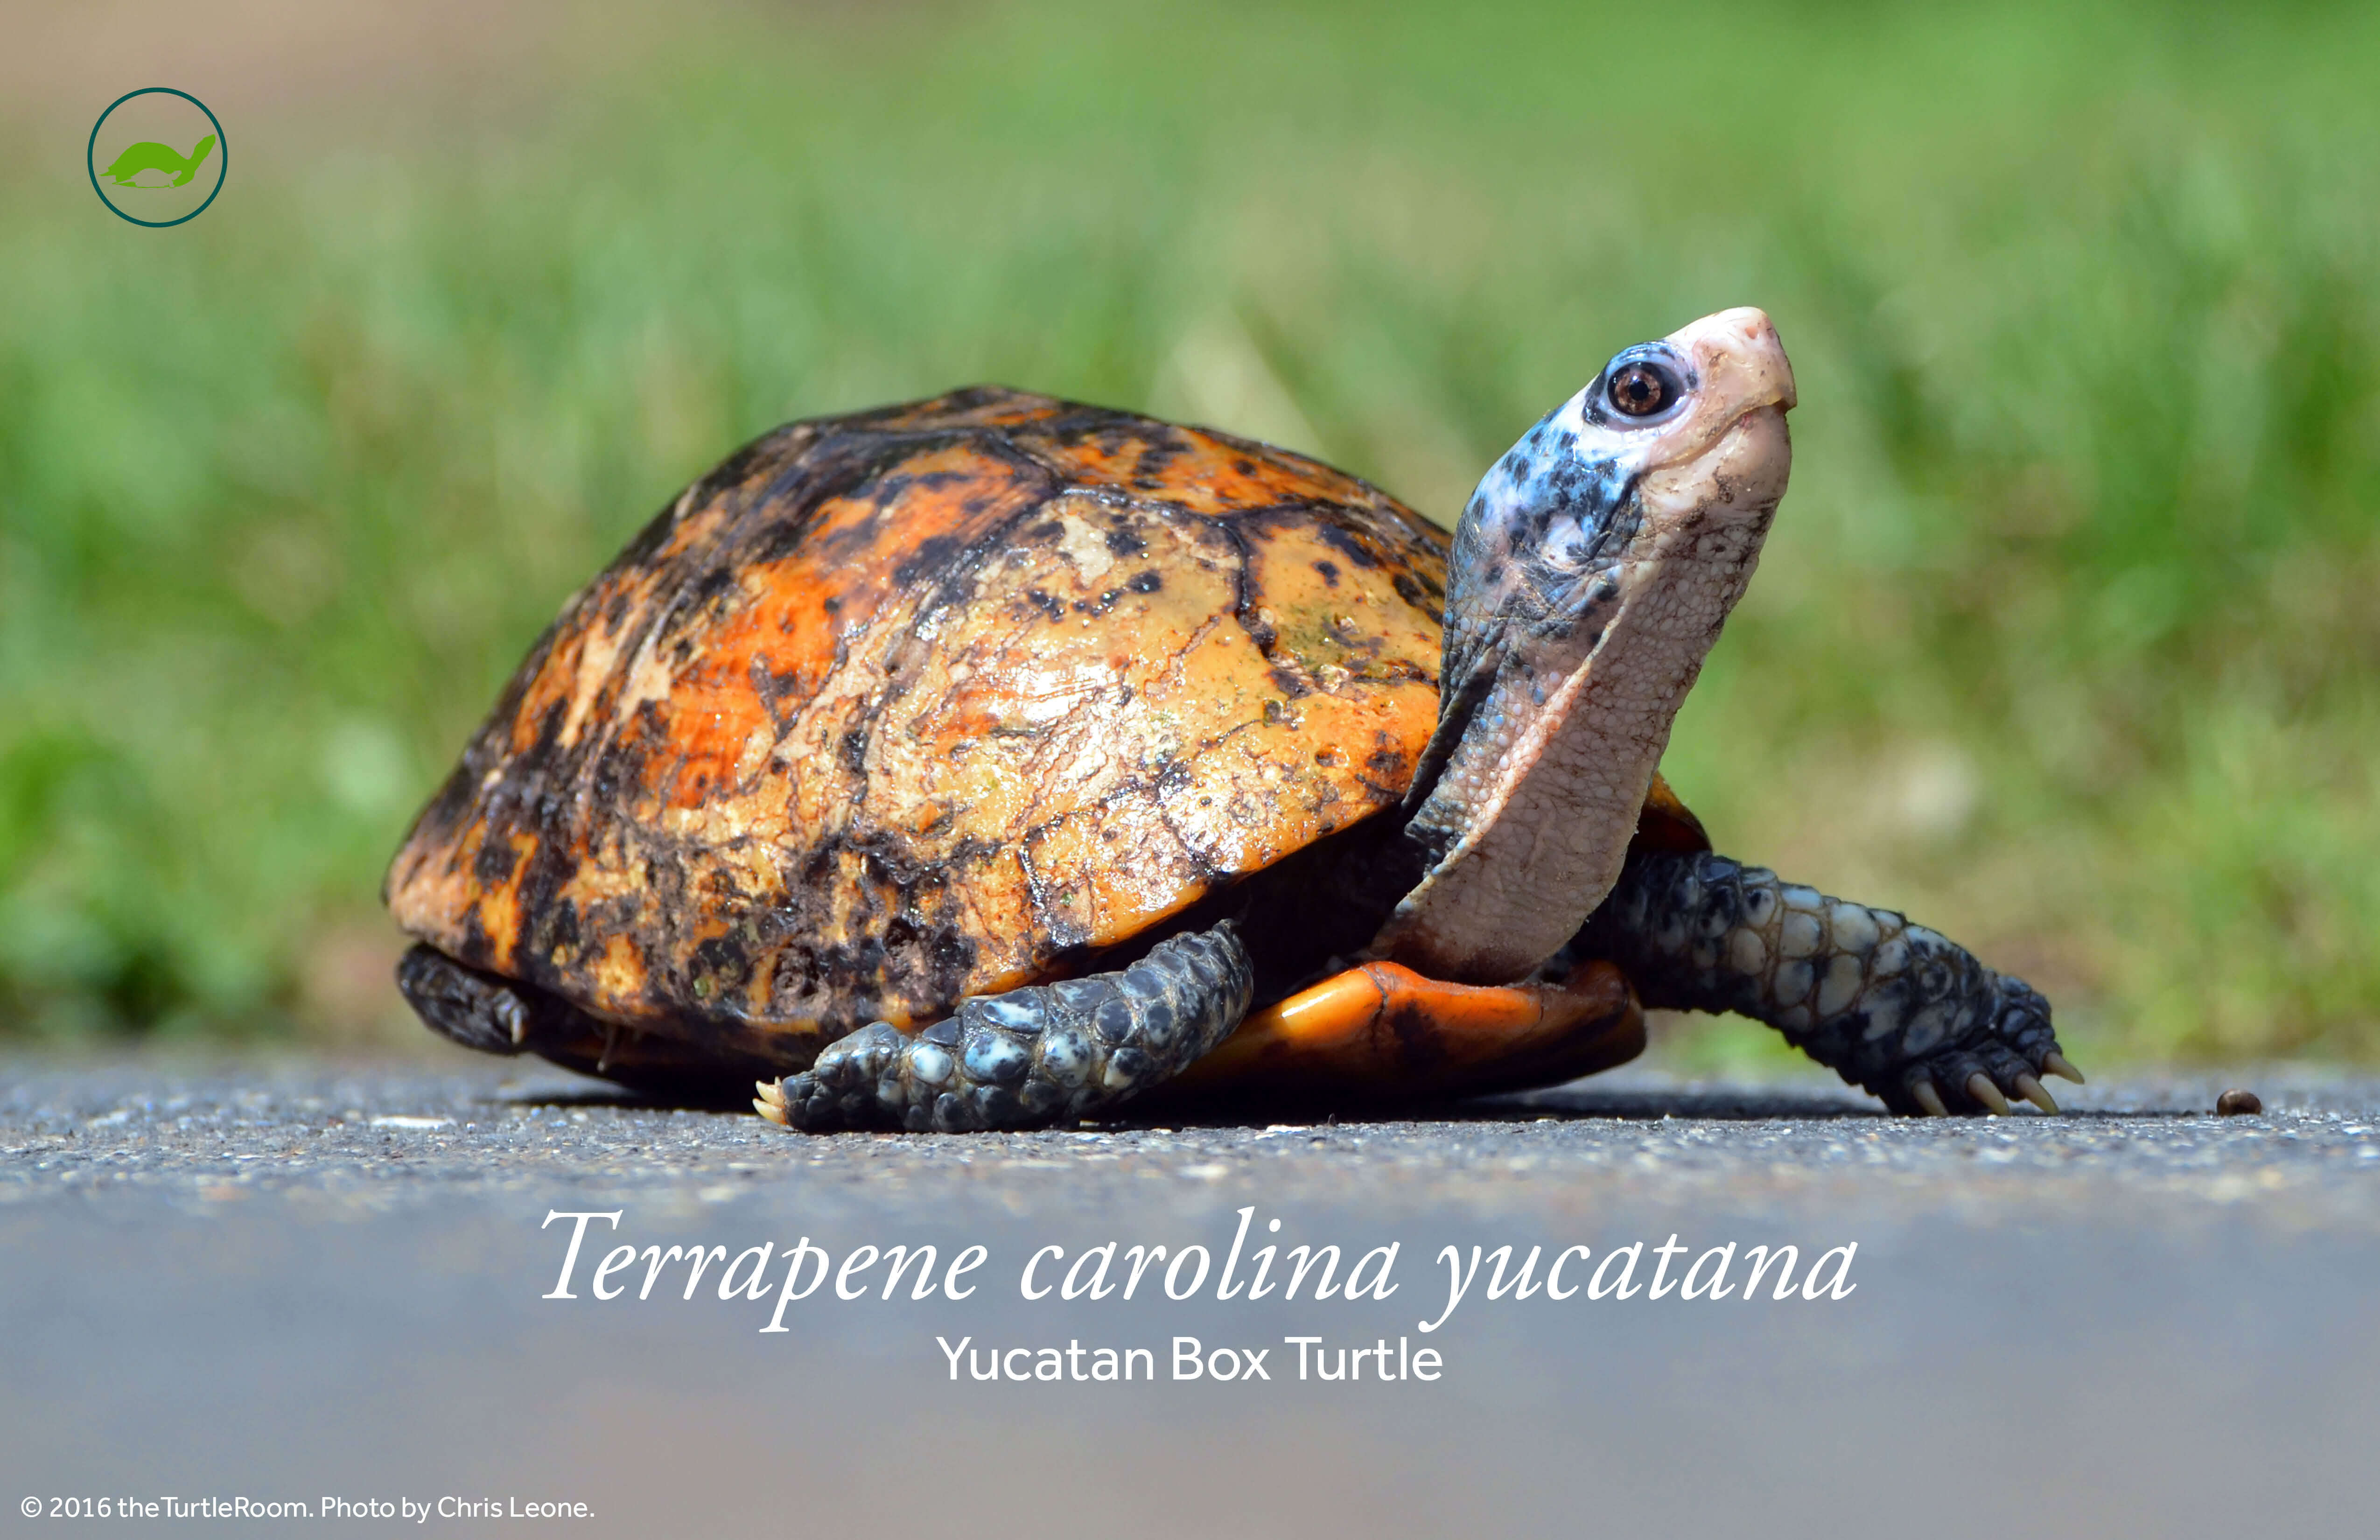 Terrapene carolina yucatana (Yucutan Box Turtle) Poster